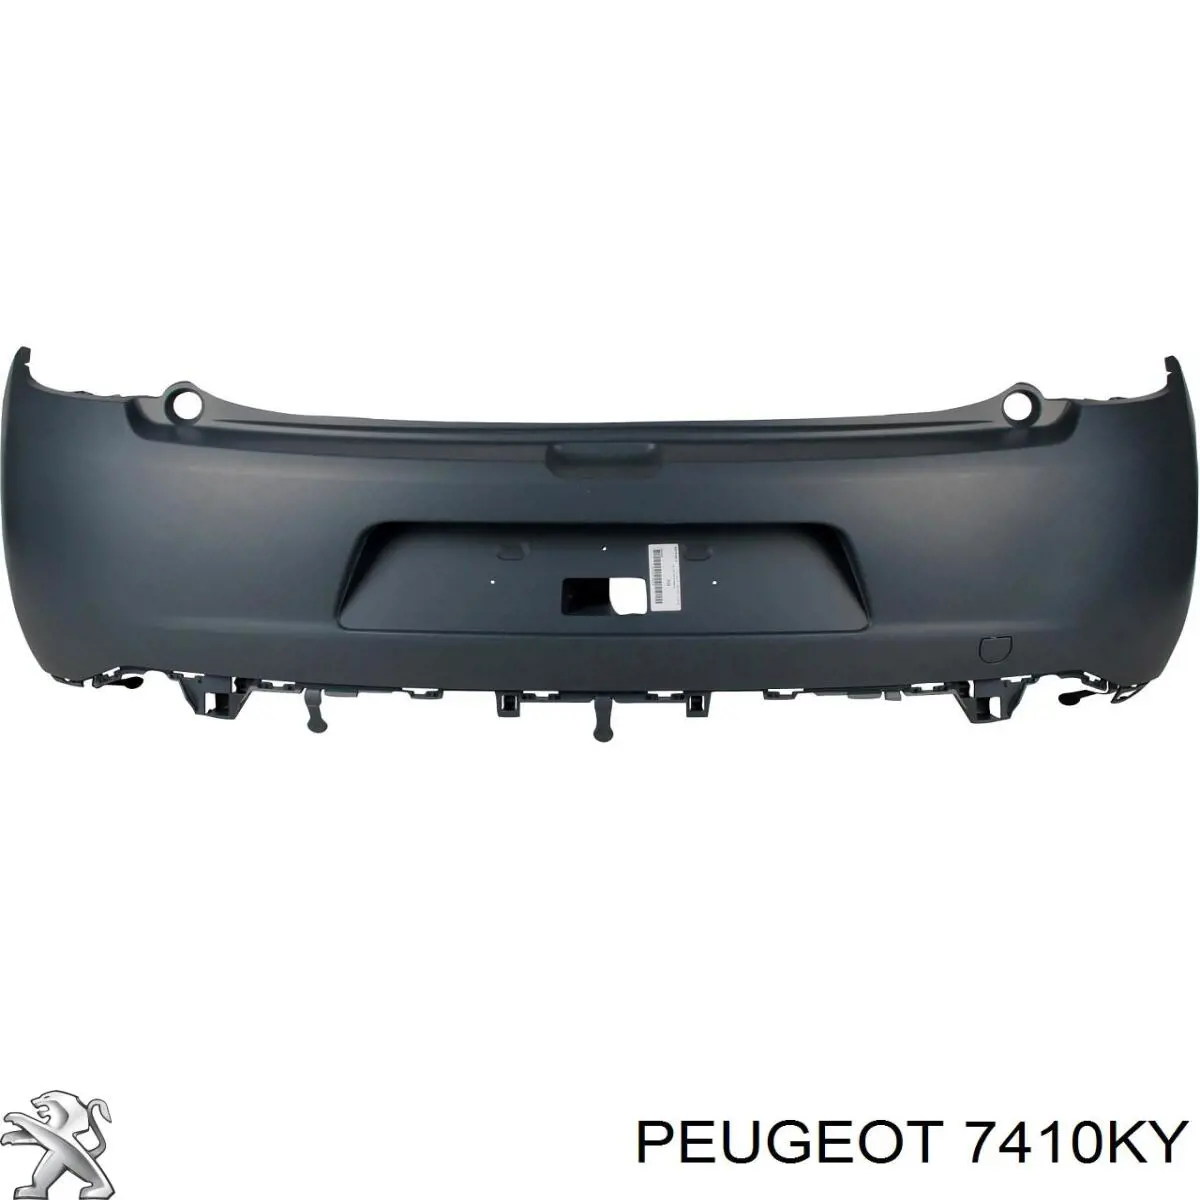 7410KY Peugeot/Citroen parachoques trasero